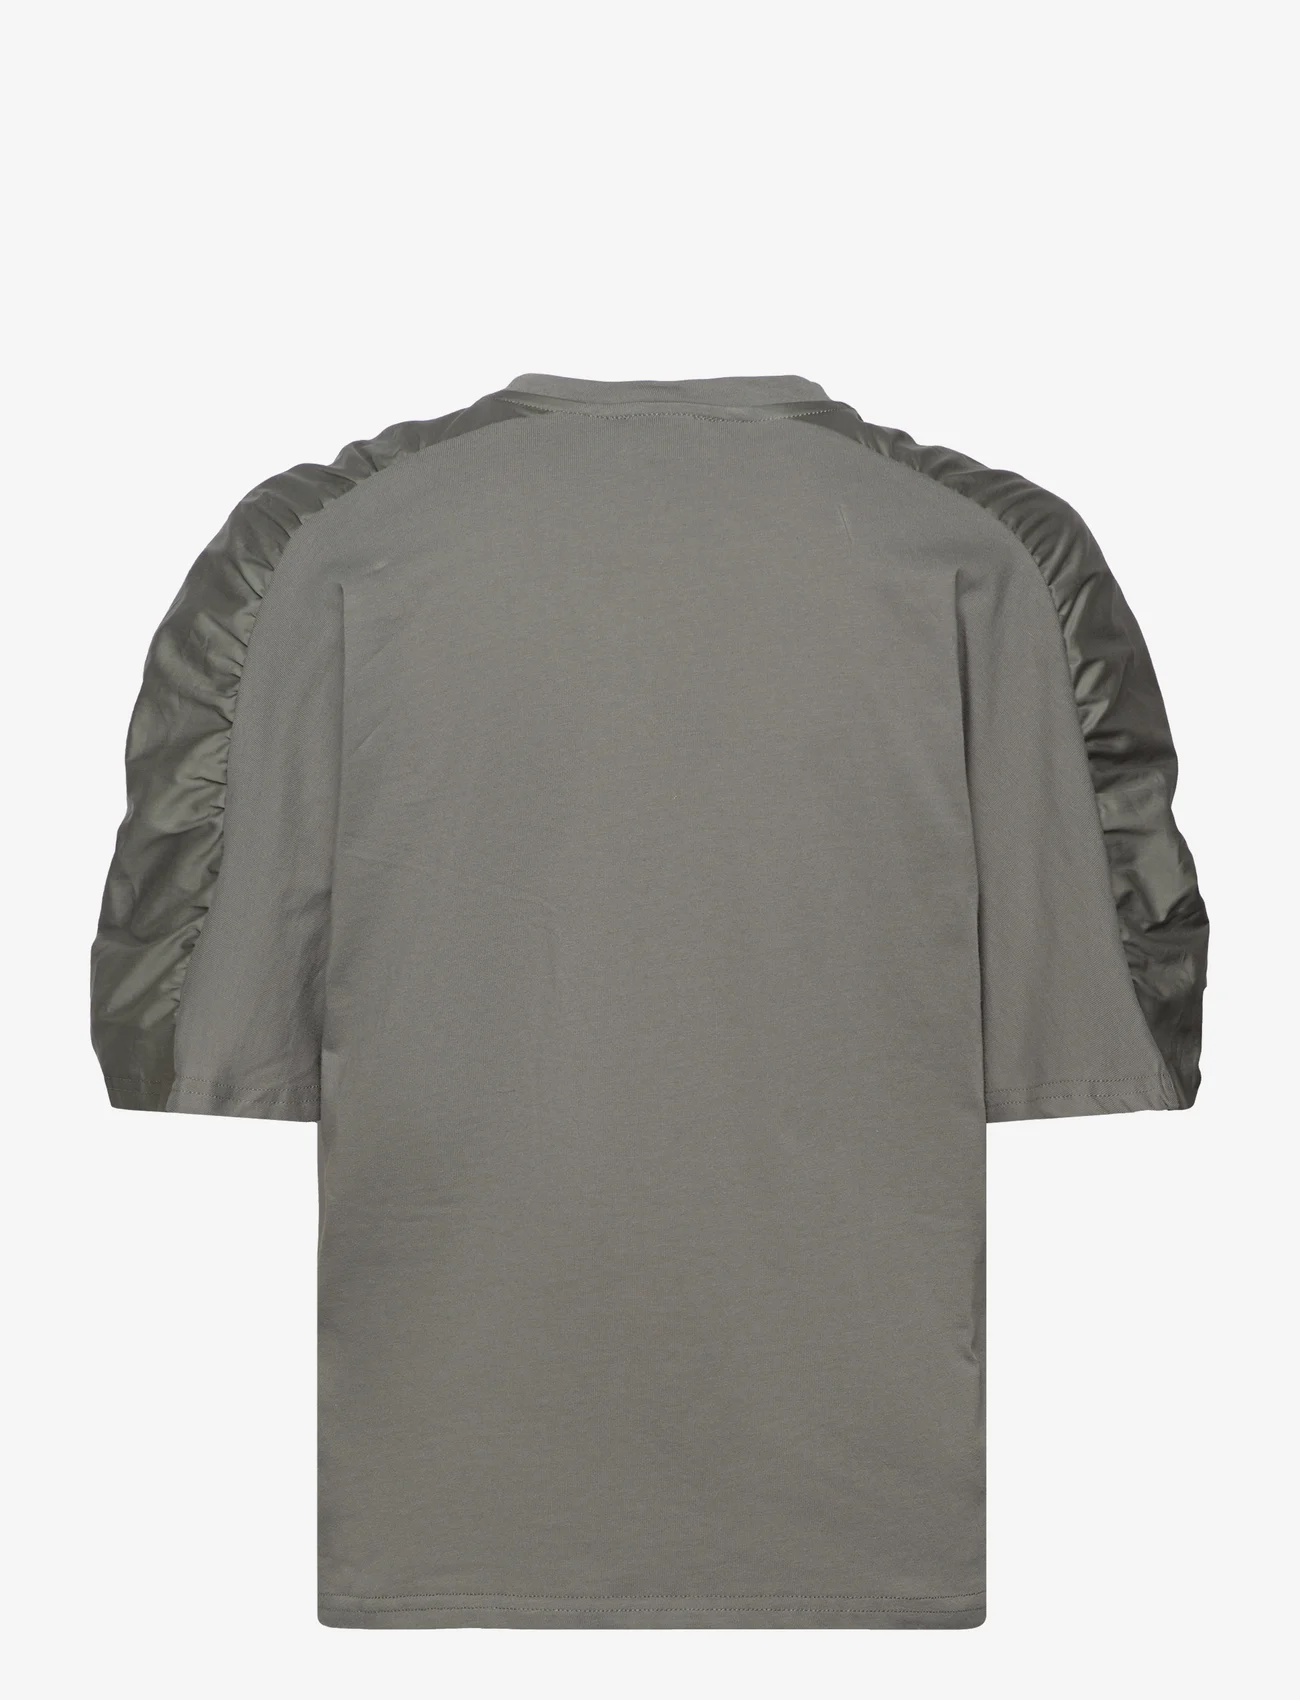 Levete Room - LR-KOWA - t-shirts & tops - castor gray - 1